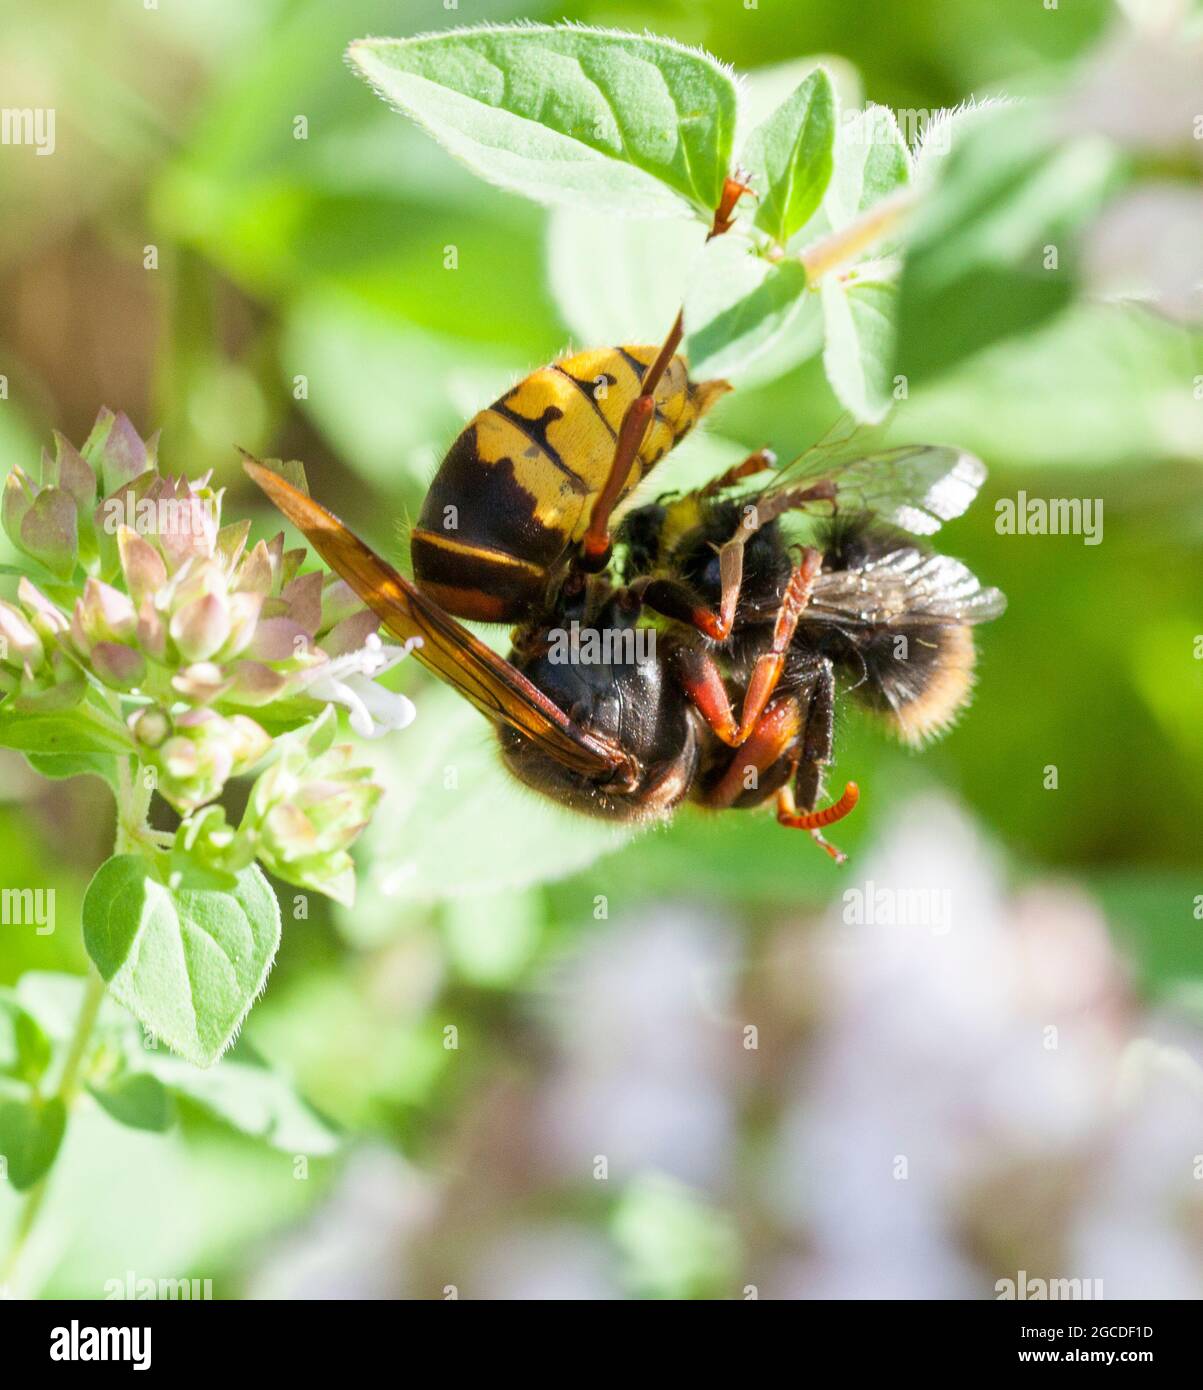 EUROPEAN HORNET attack Bumble bee on plant Vespa Crabro Stock Photo